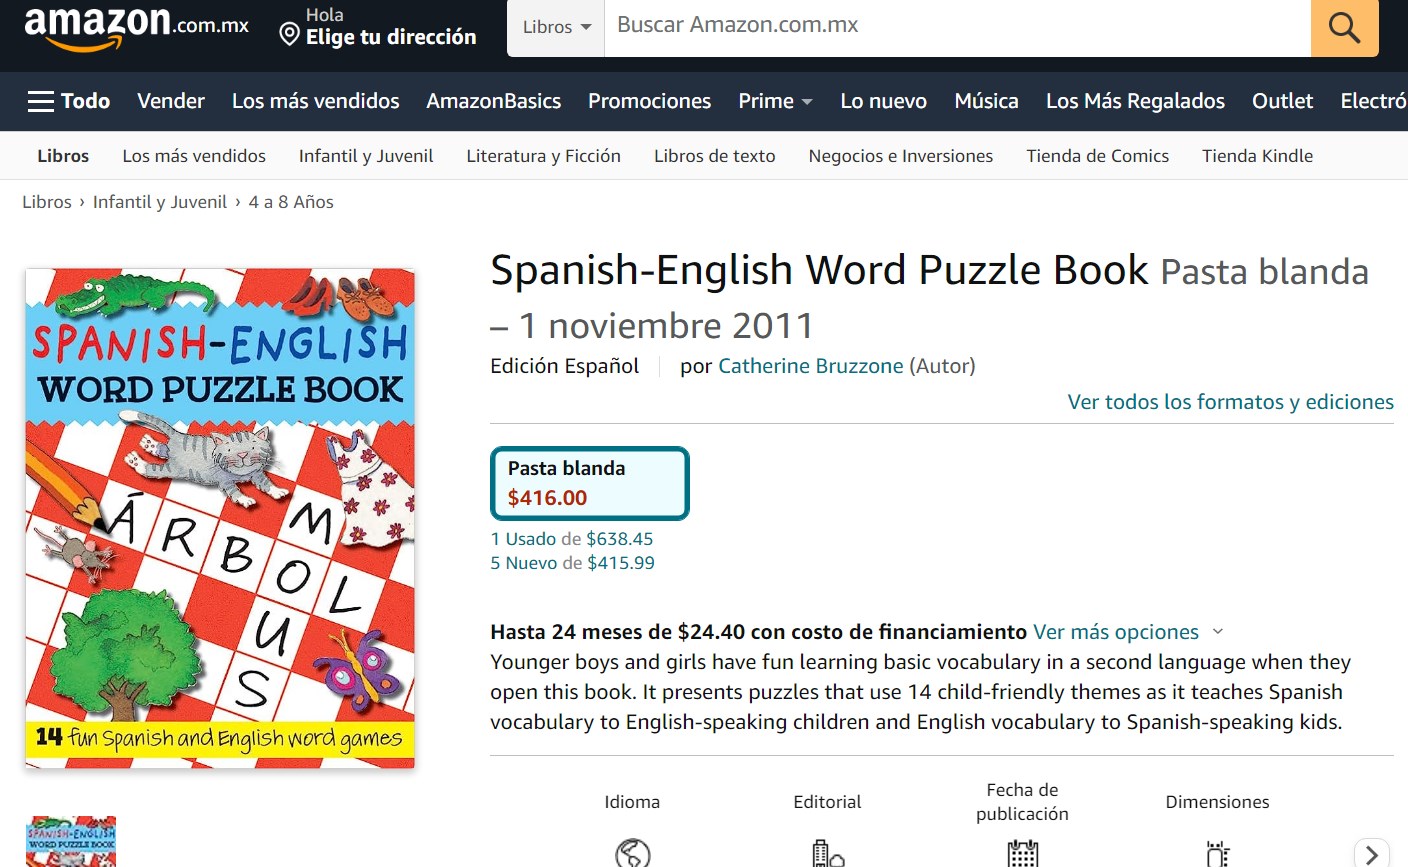 Libro: Libro de rompecabezas de palabras español-inglés por Catherine Bruzzone